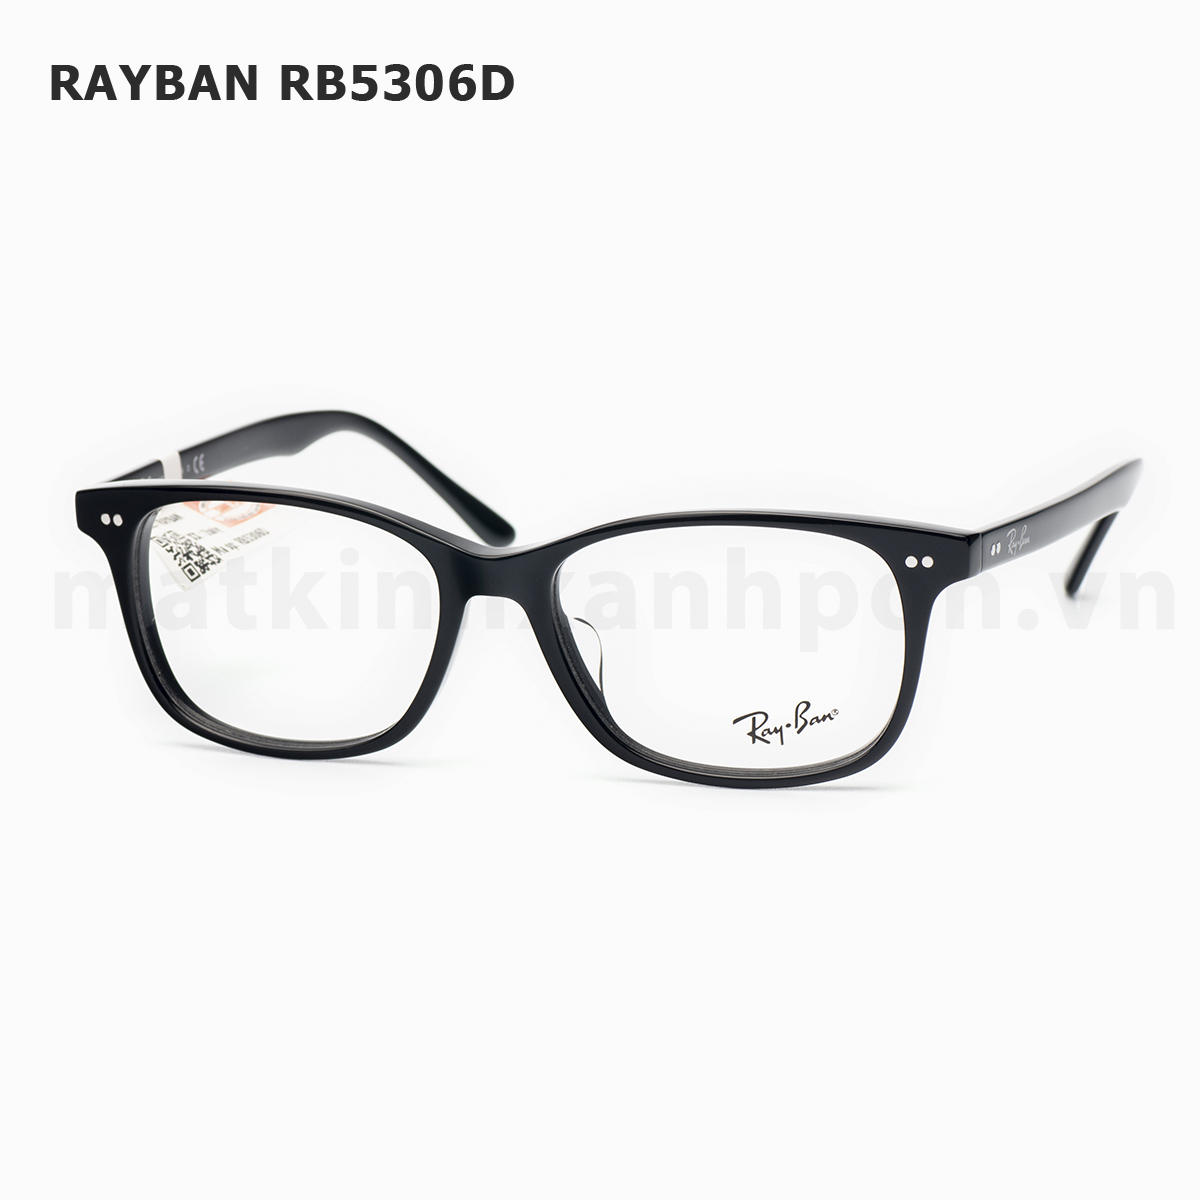 Rayban RB5306D